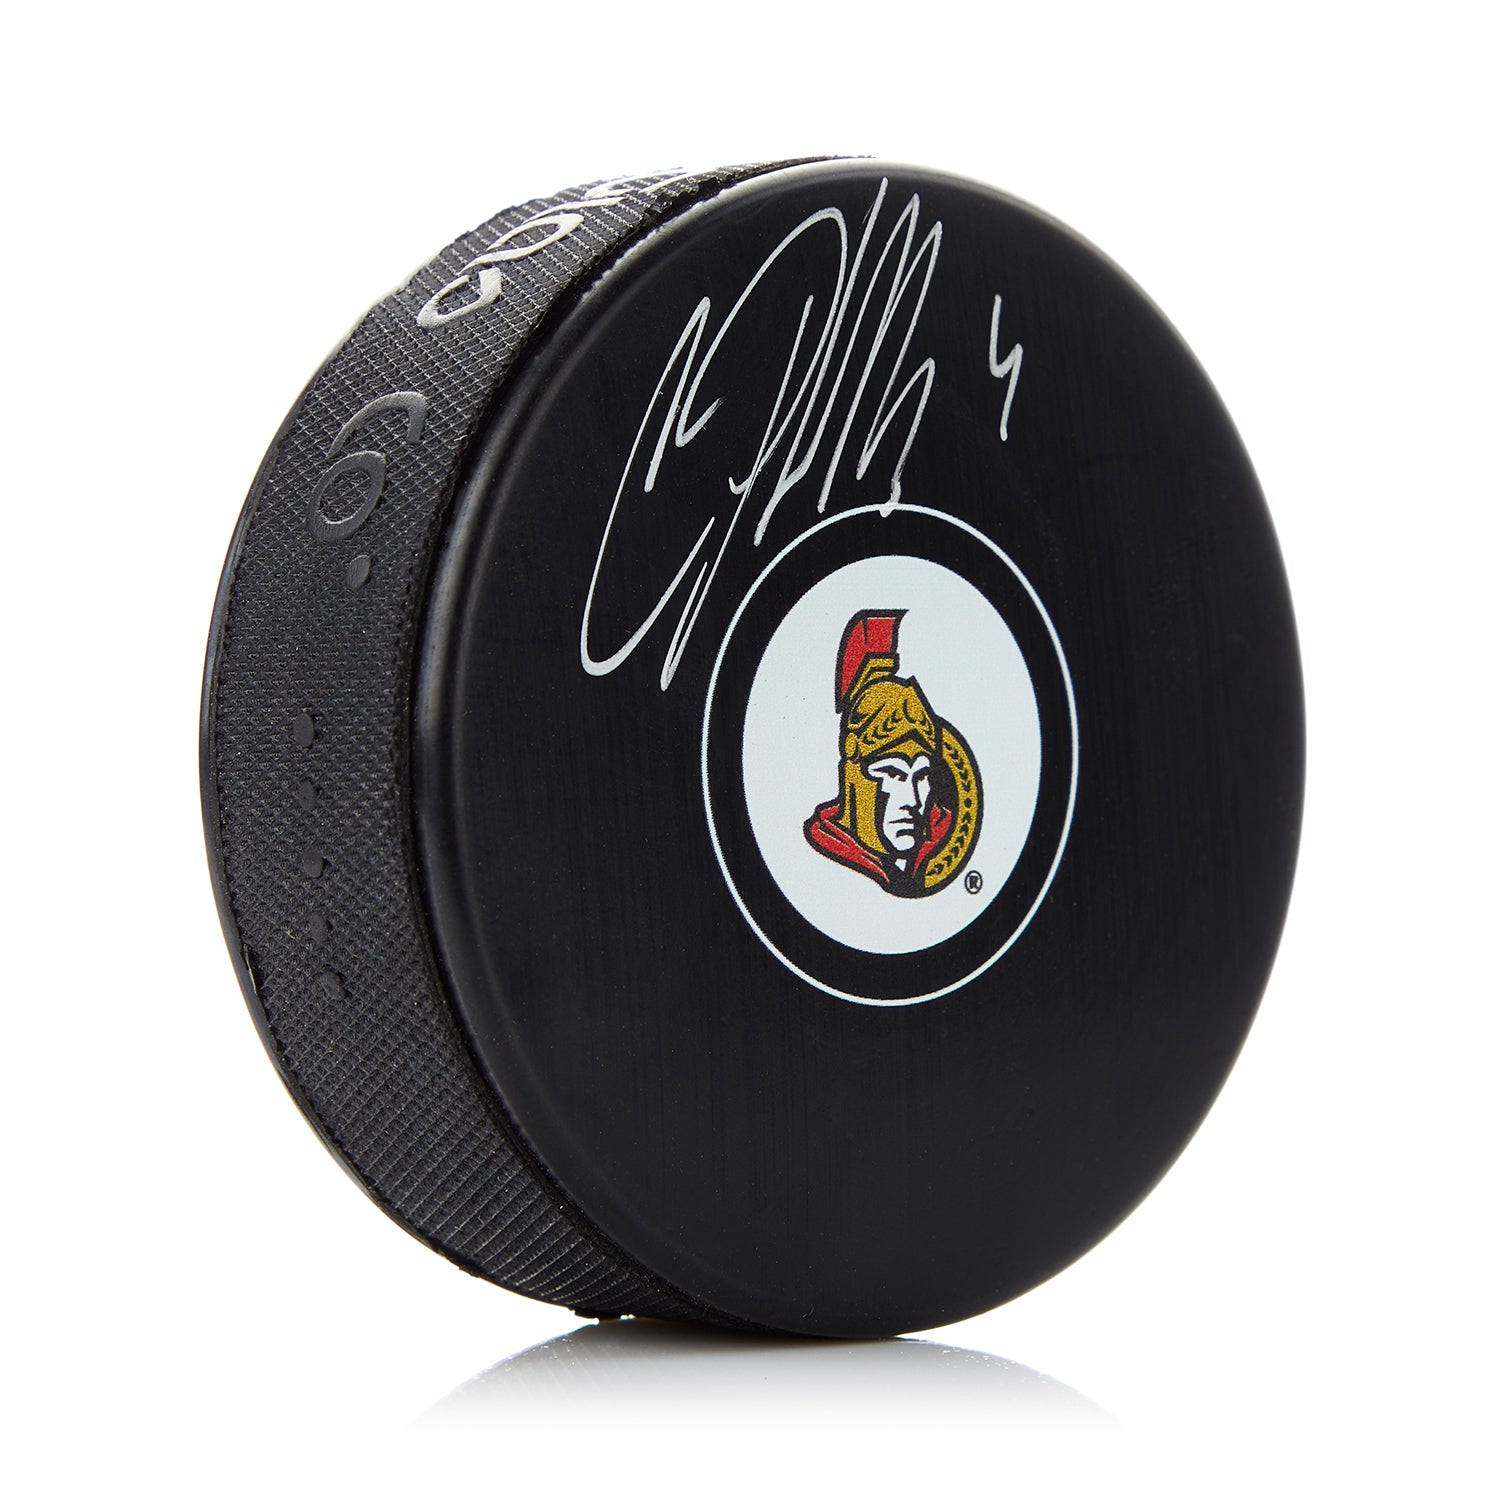 Chris Phillips Ottawa Senators Autographed Hockey Puck